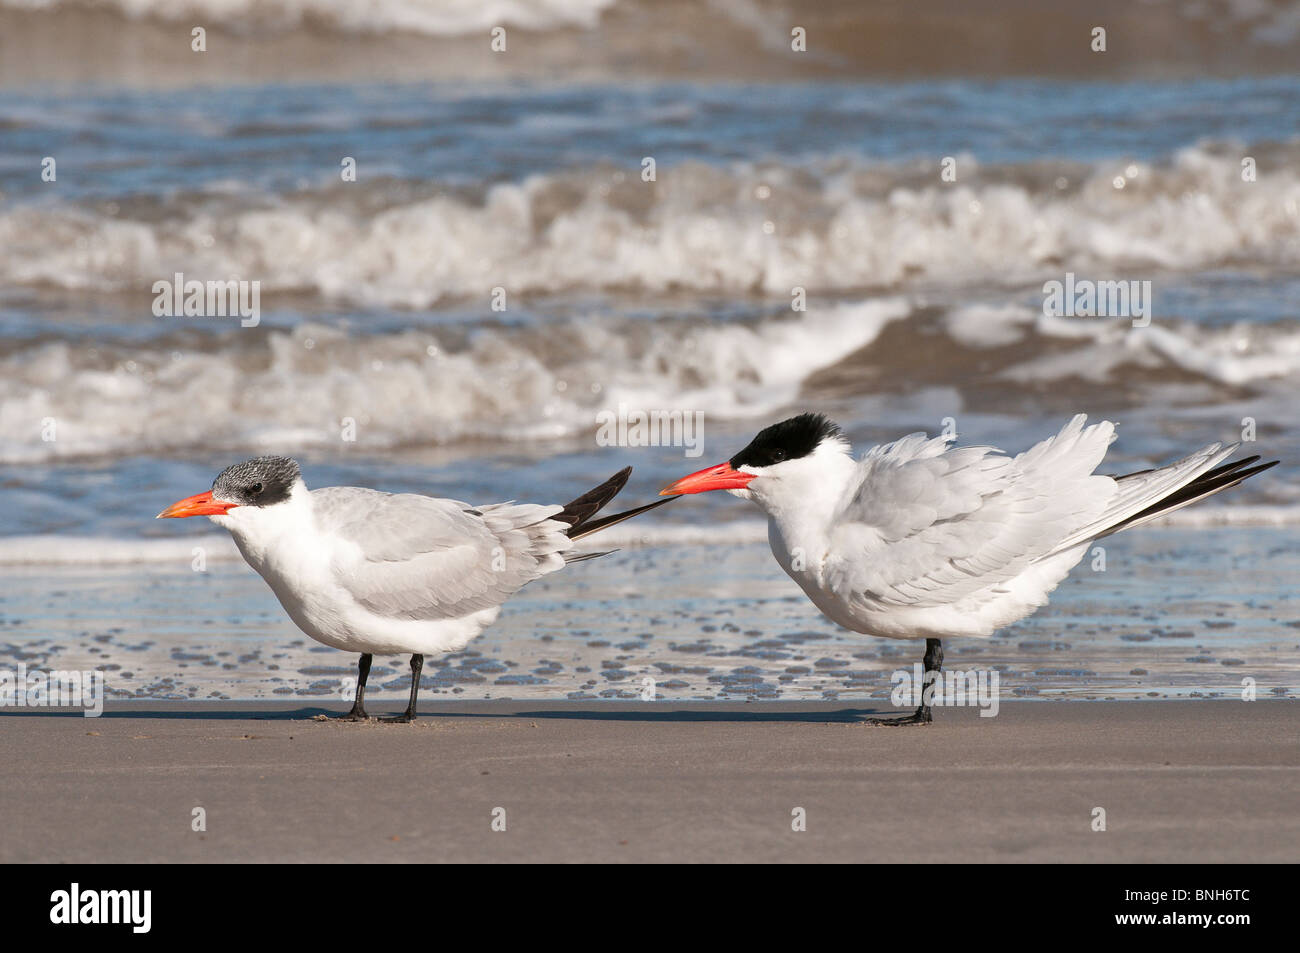 Texas, Padre Island. Royal terns in Padre Island National Seashore. Stock Photo